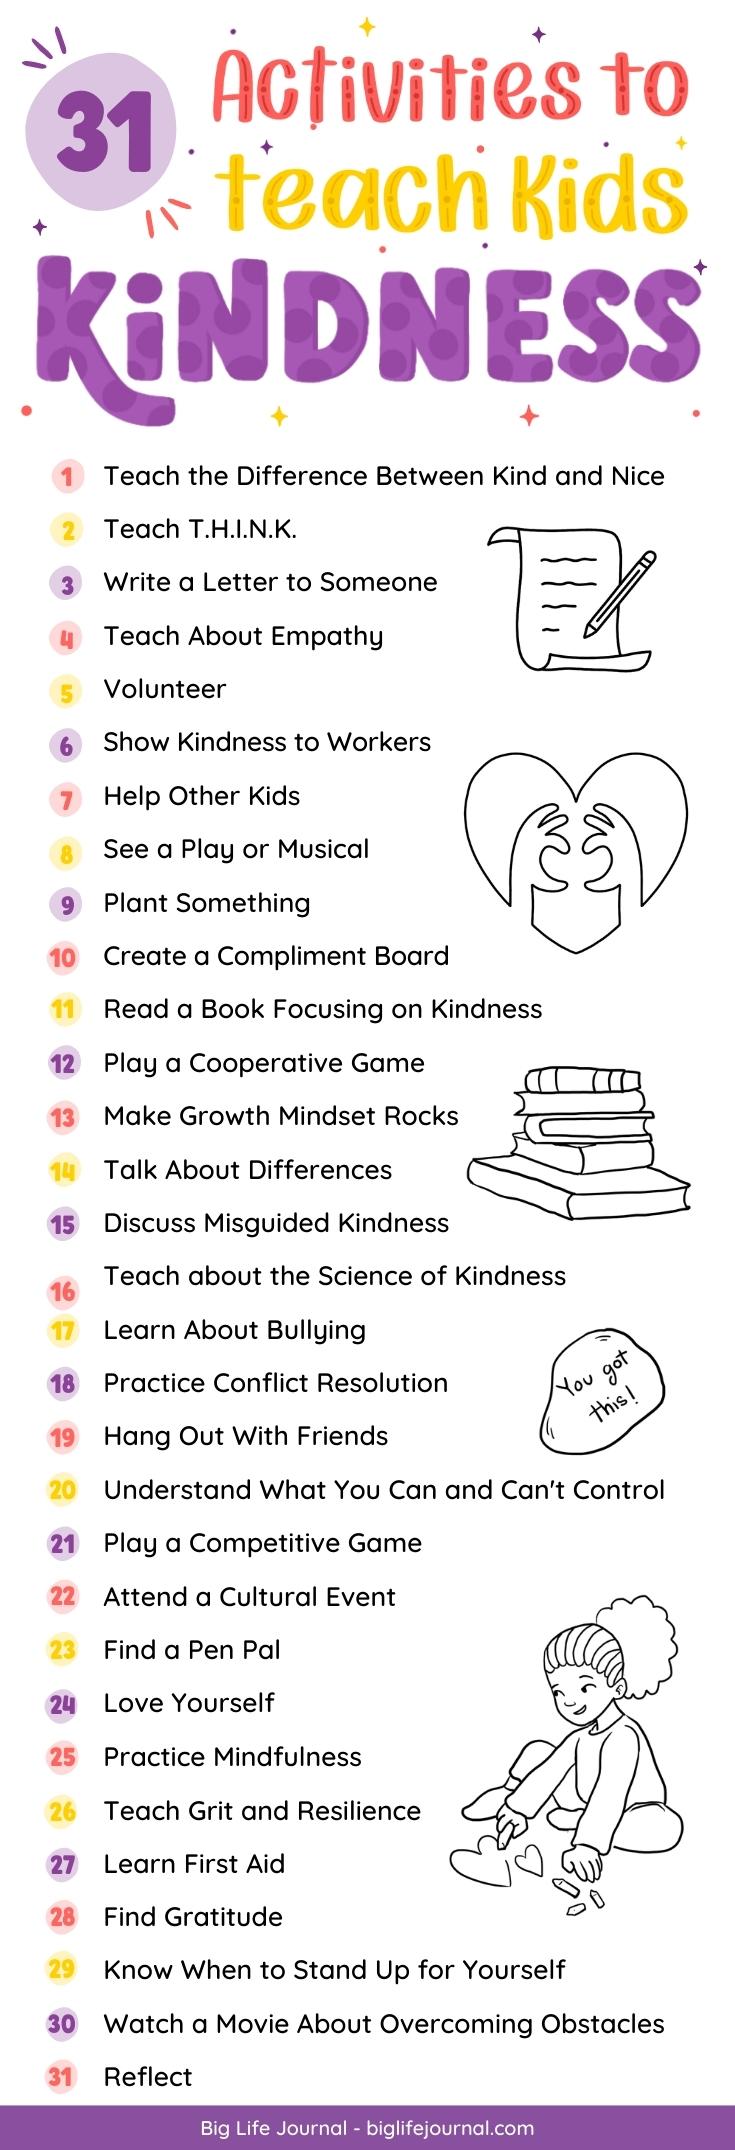 31 Kindness Activities for Kids | Big Life Journal